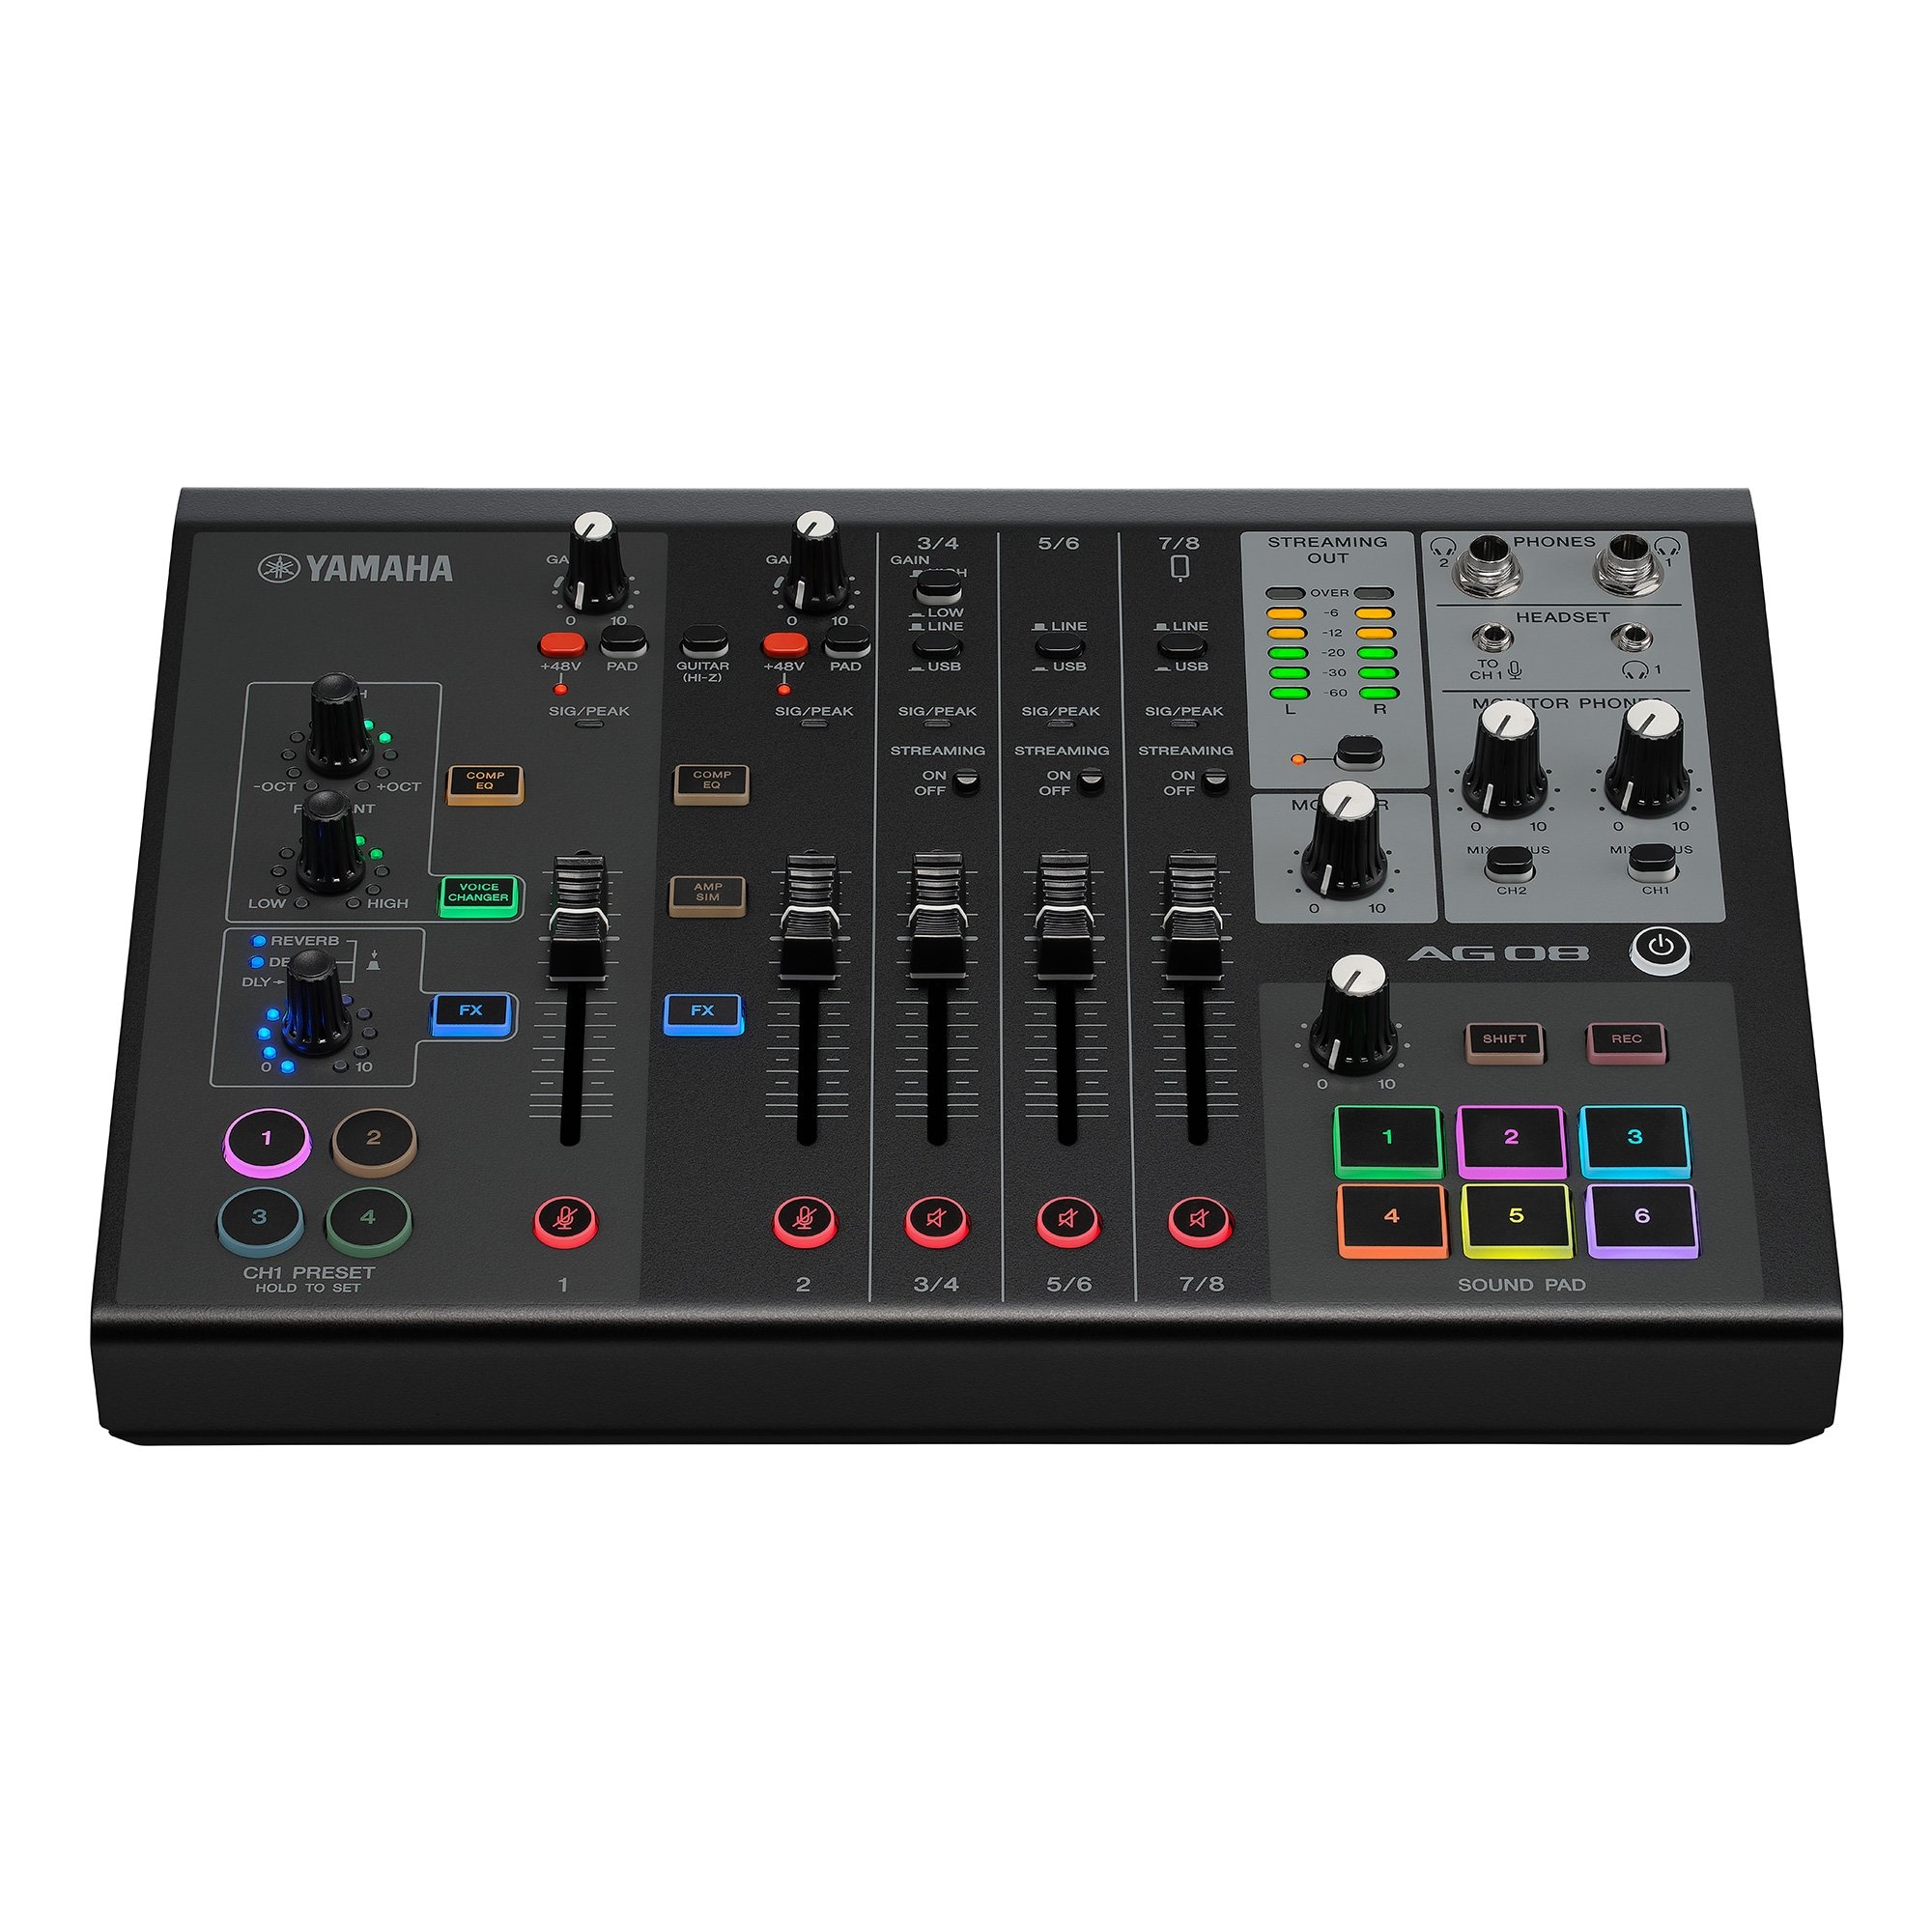 AG08 Live Streaming Mixer Example Systems - Yamaha USA